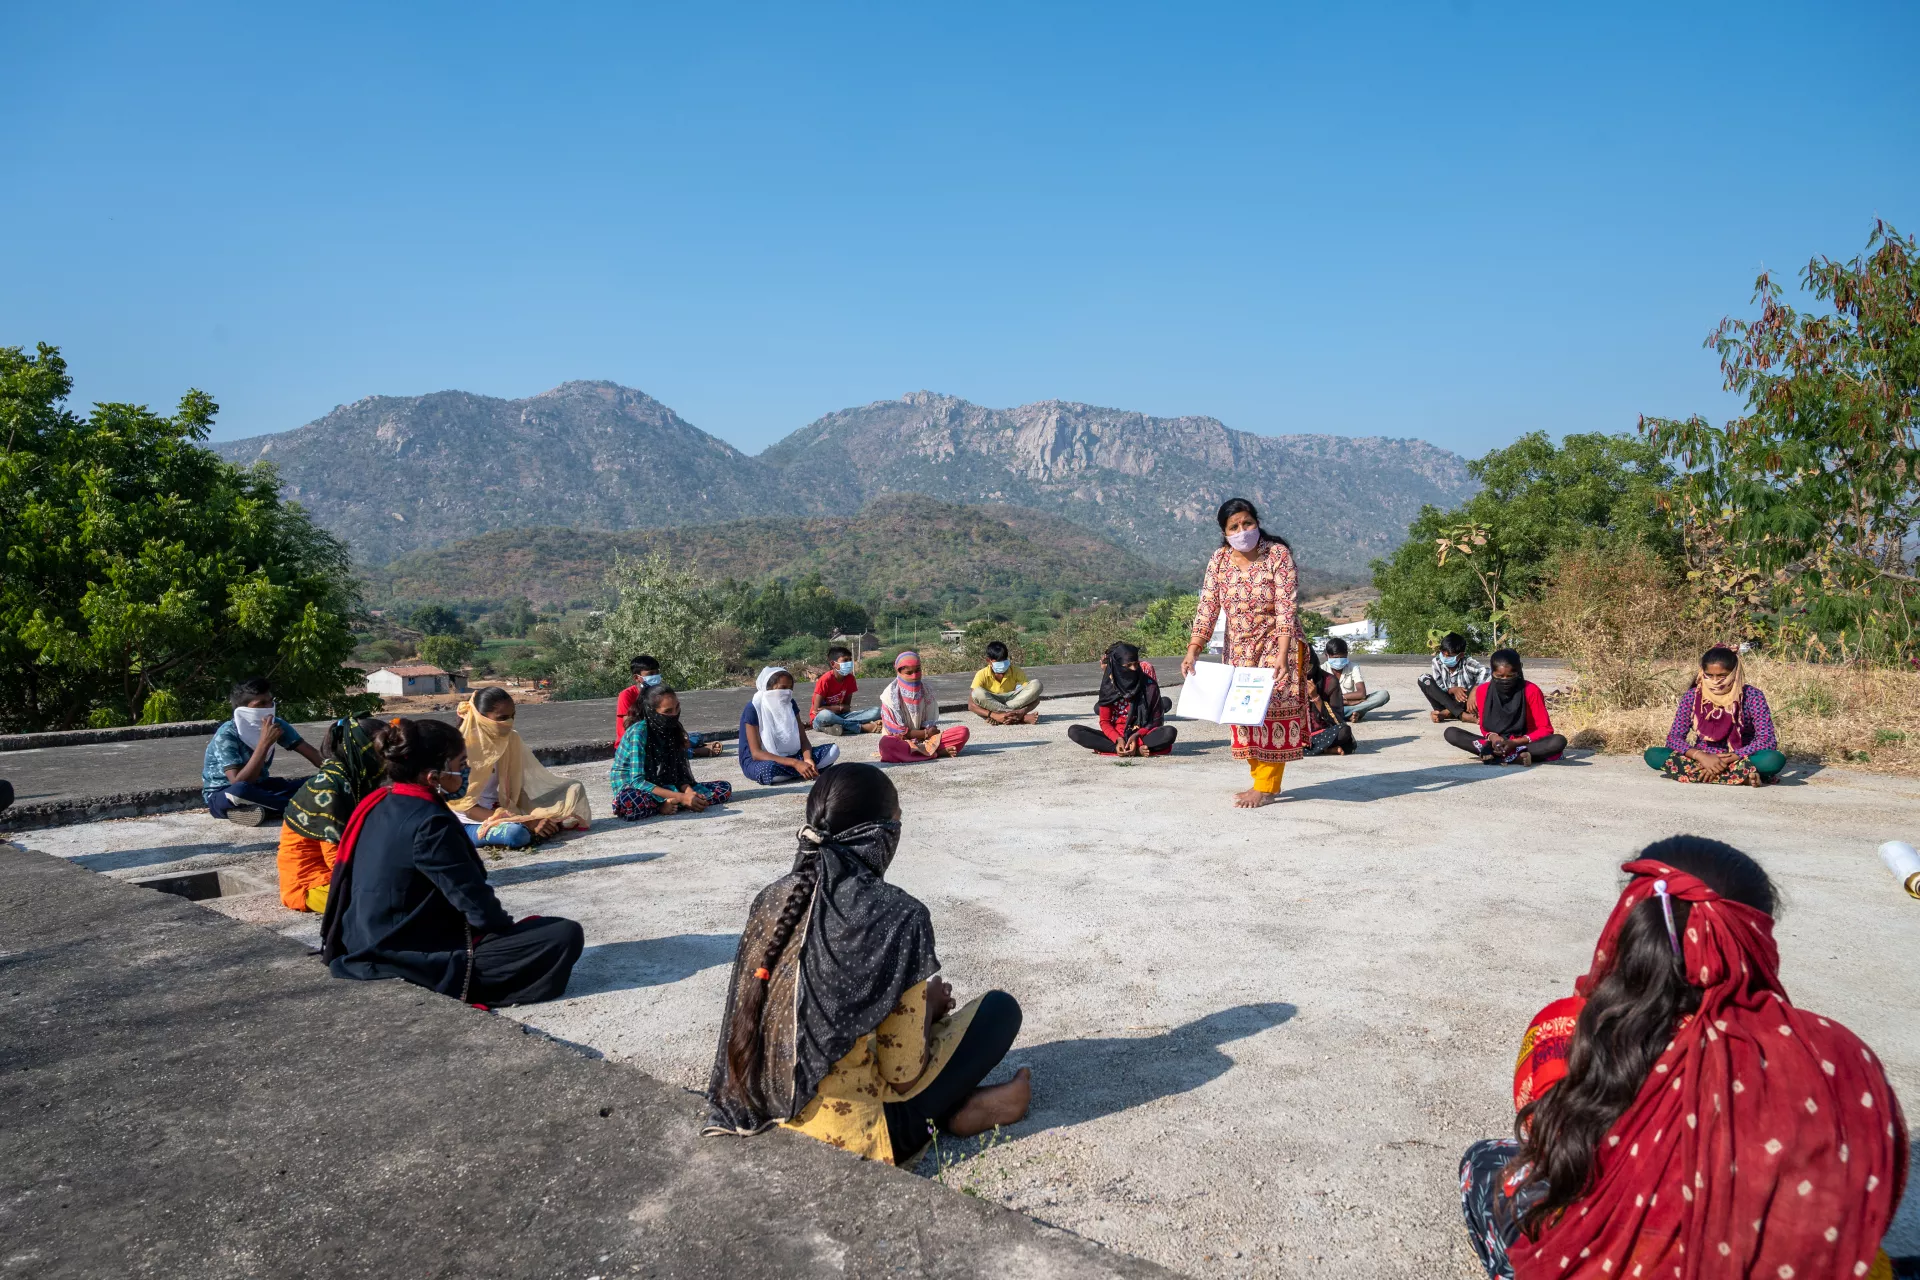 Unicef Cordinators Shipla ben and Kanubhai conduct meetings with children under Alternative care and mental health pshycho social support engagement. Location : Village Kantivaas, Banaskantha, Gujarat, India